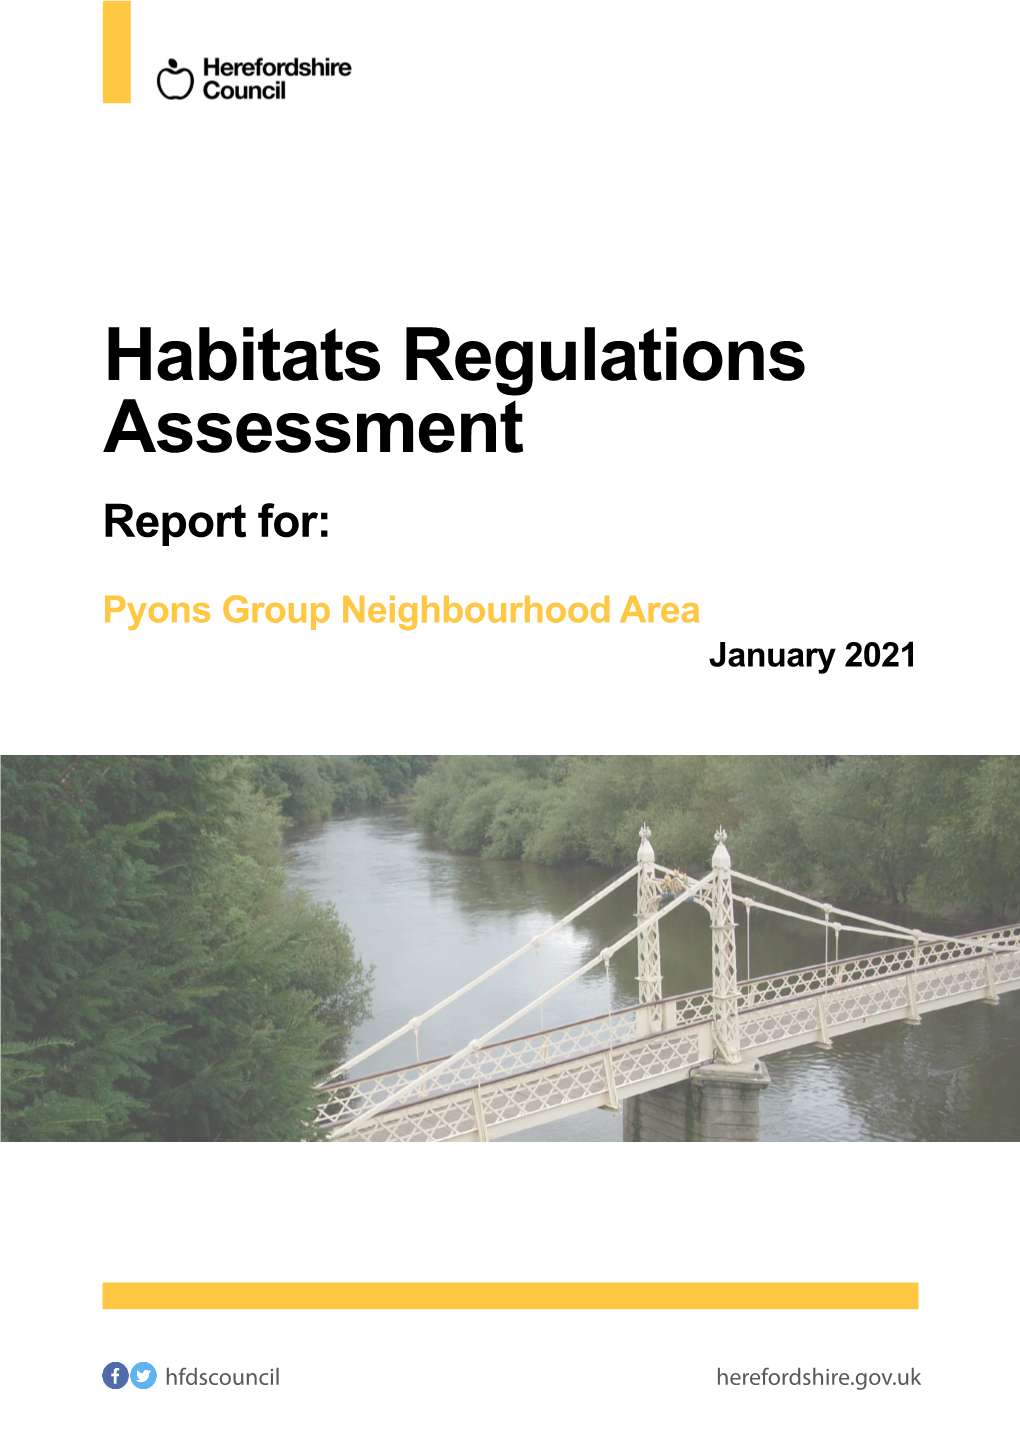 Pyons Group Habitats Regulations Assessment January 2021